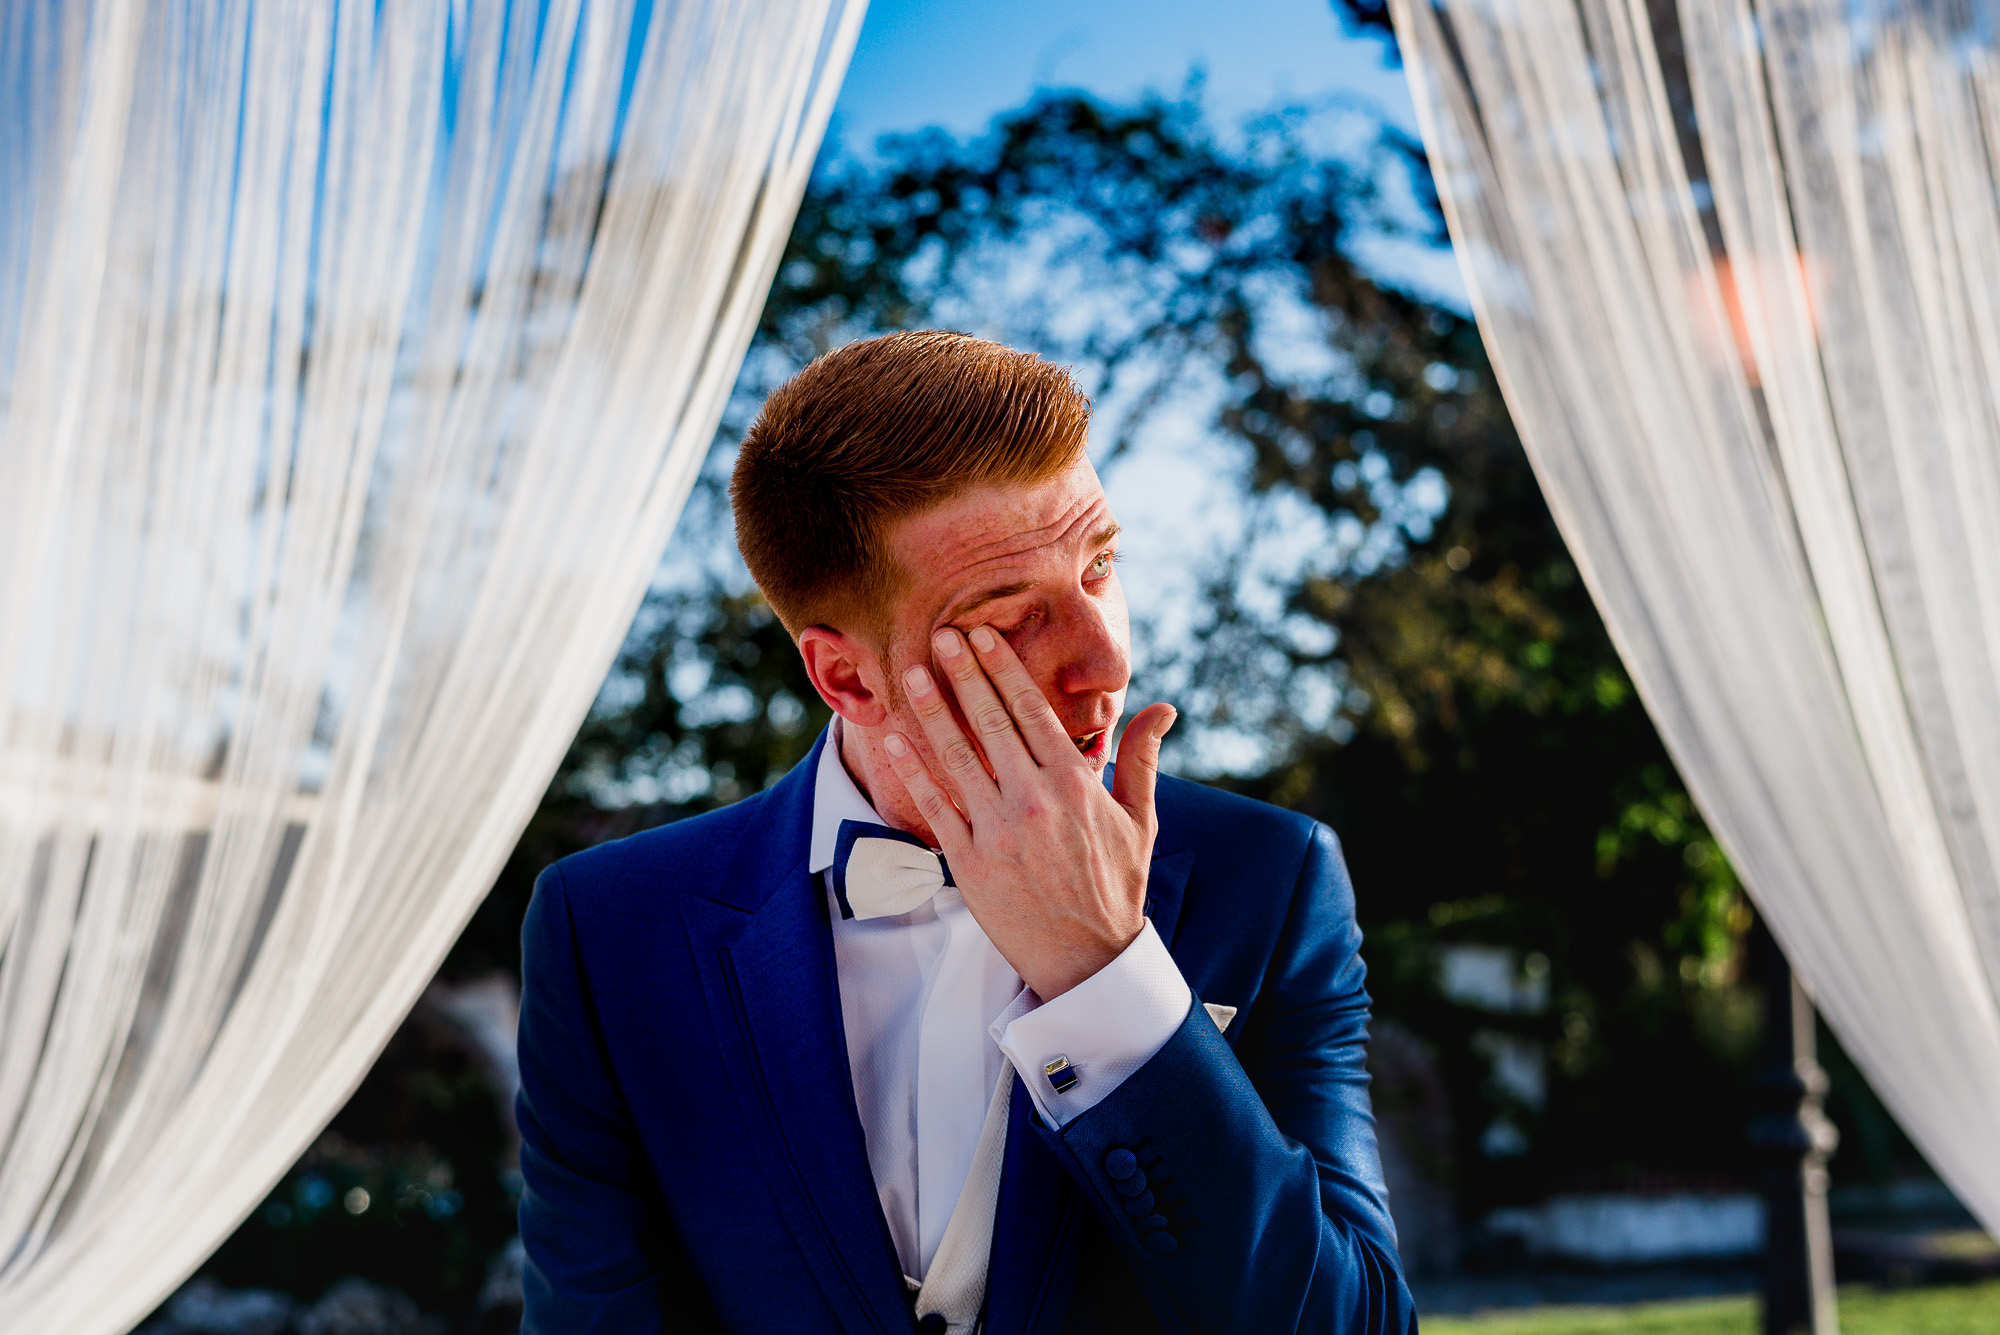 fotografos de boda diferentes, capturamos emociones